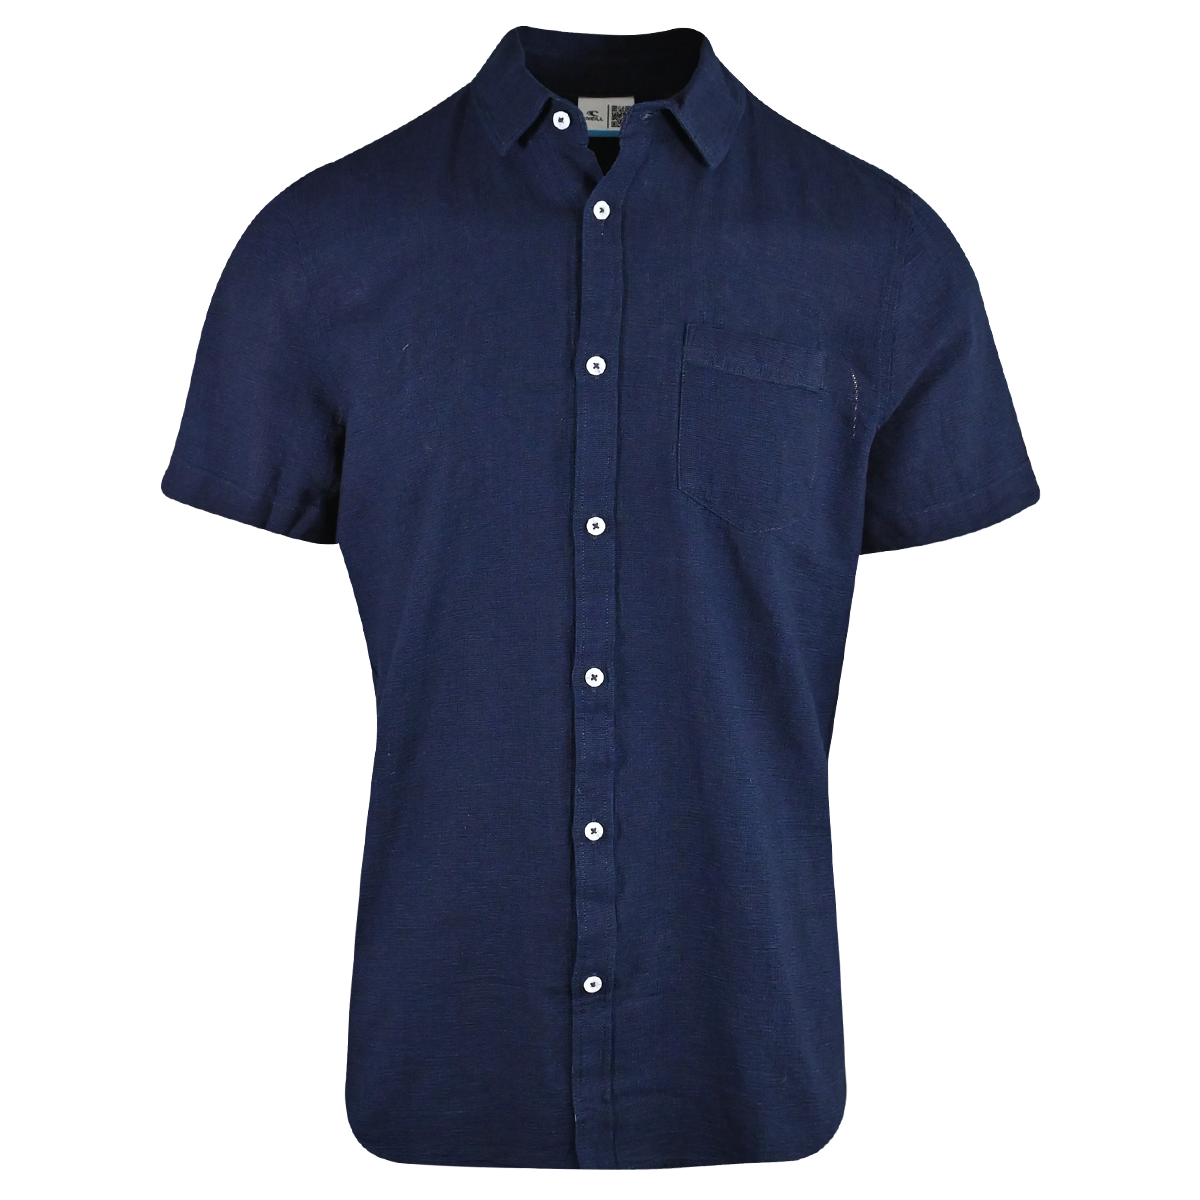 O'Neill Men's Woven Shirt Solid Chambray Pocket Short Sleeve